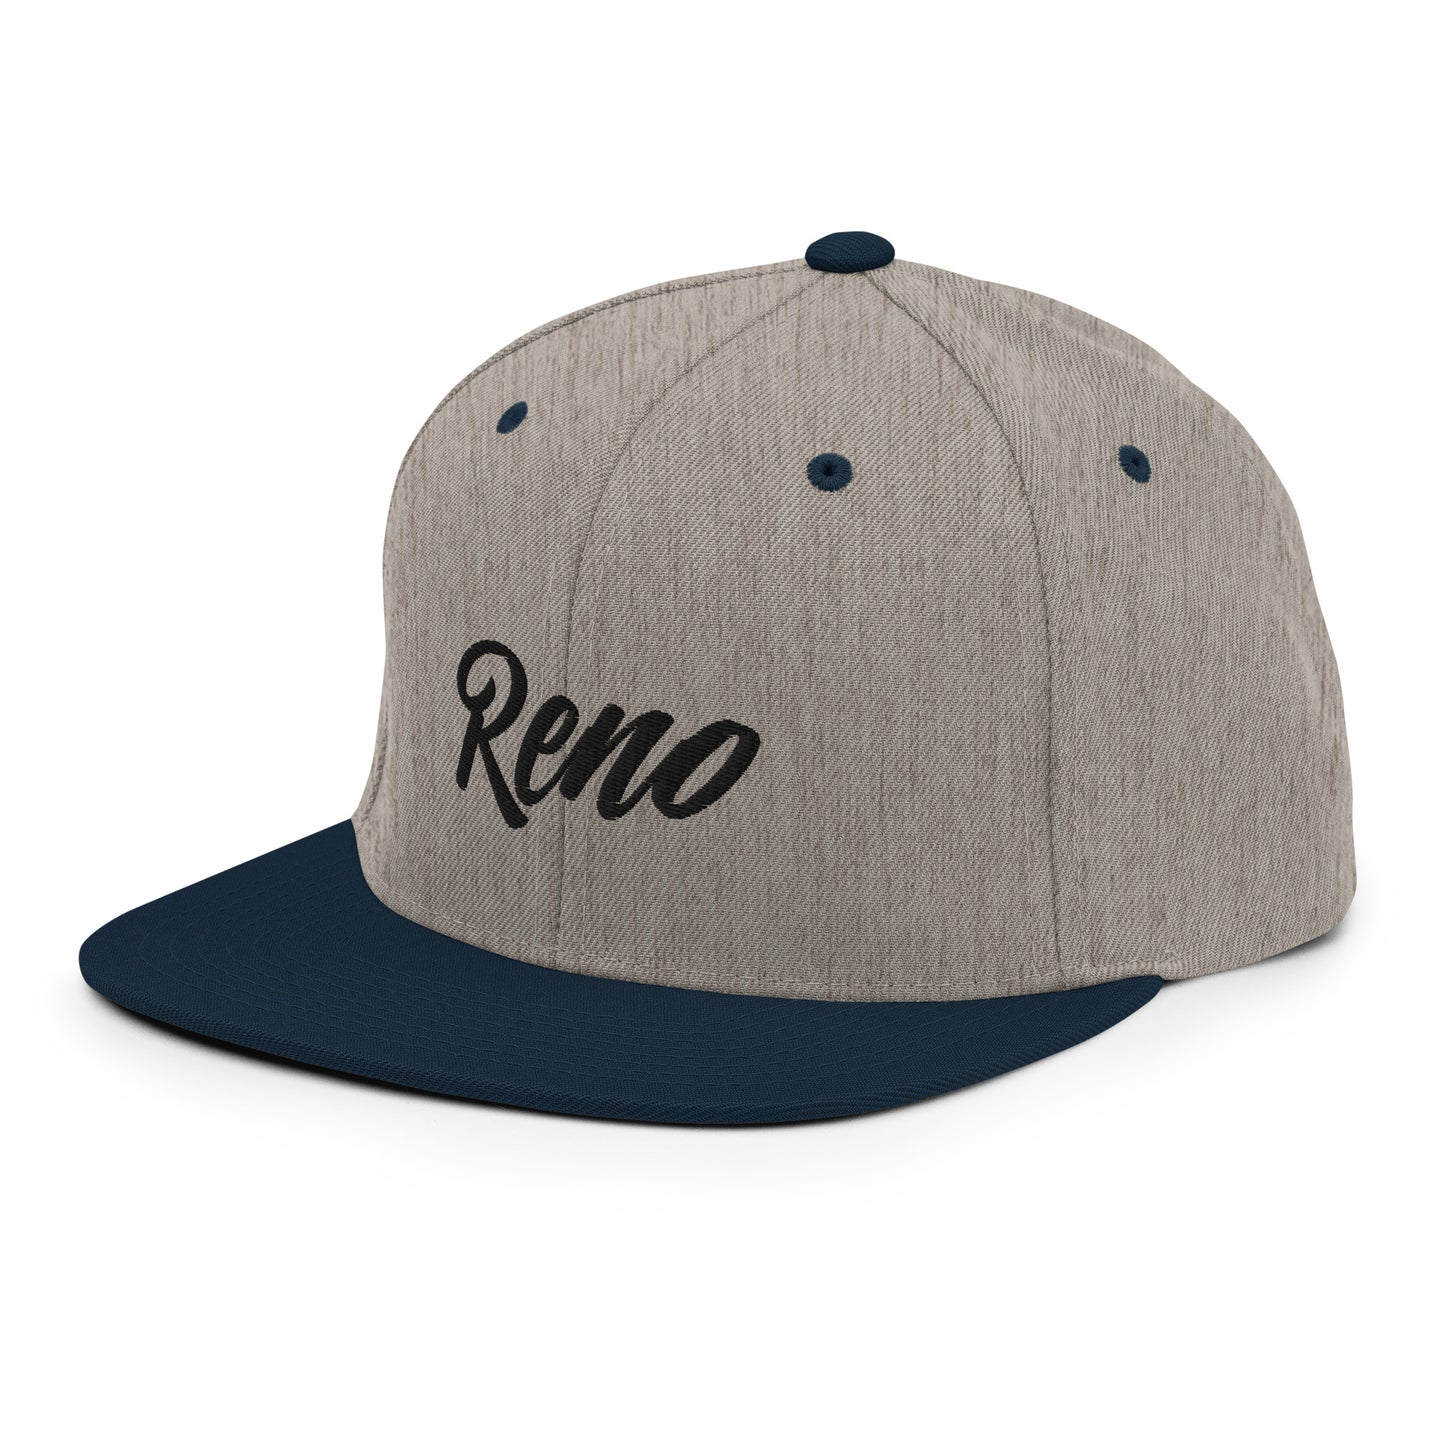 Reno Snapback Hat 7